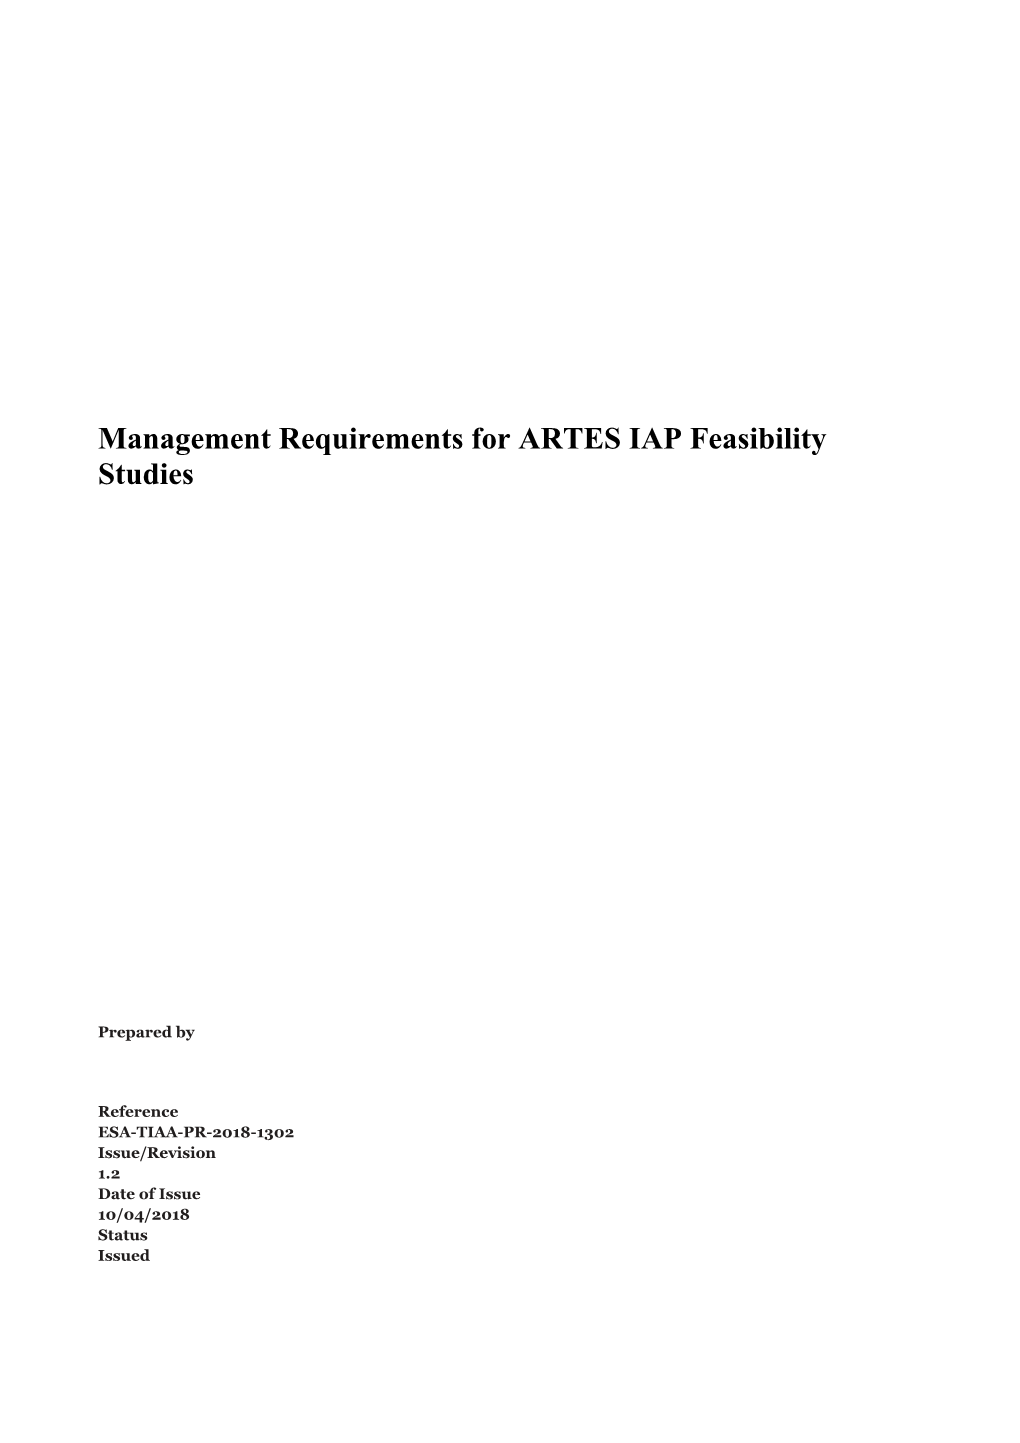 Management Requirements for ARTES IAP Feasibility Studies